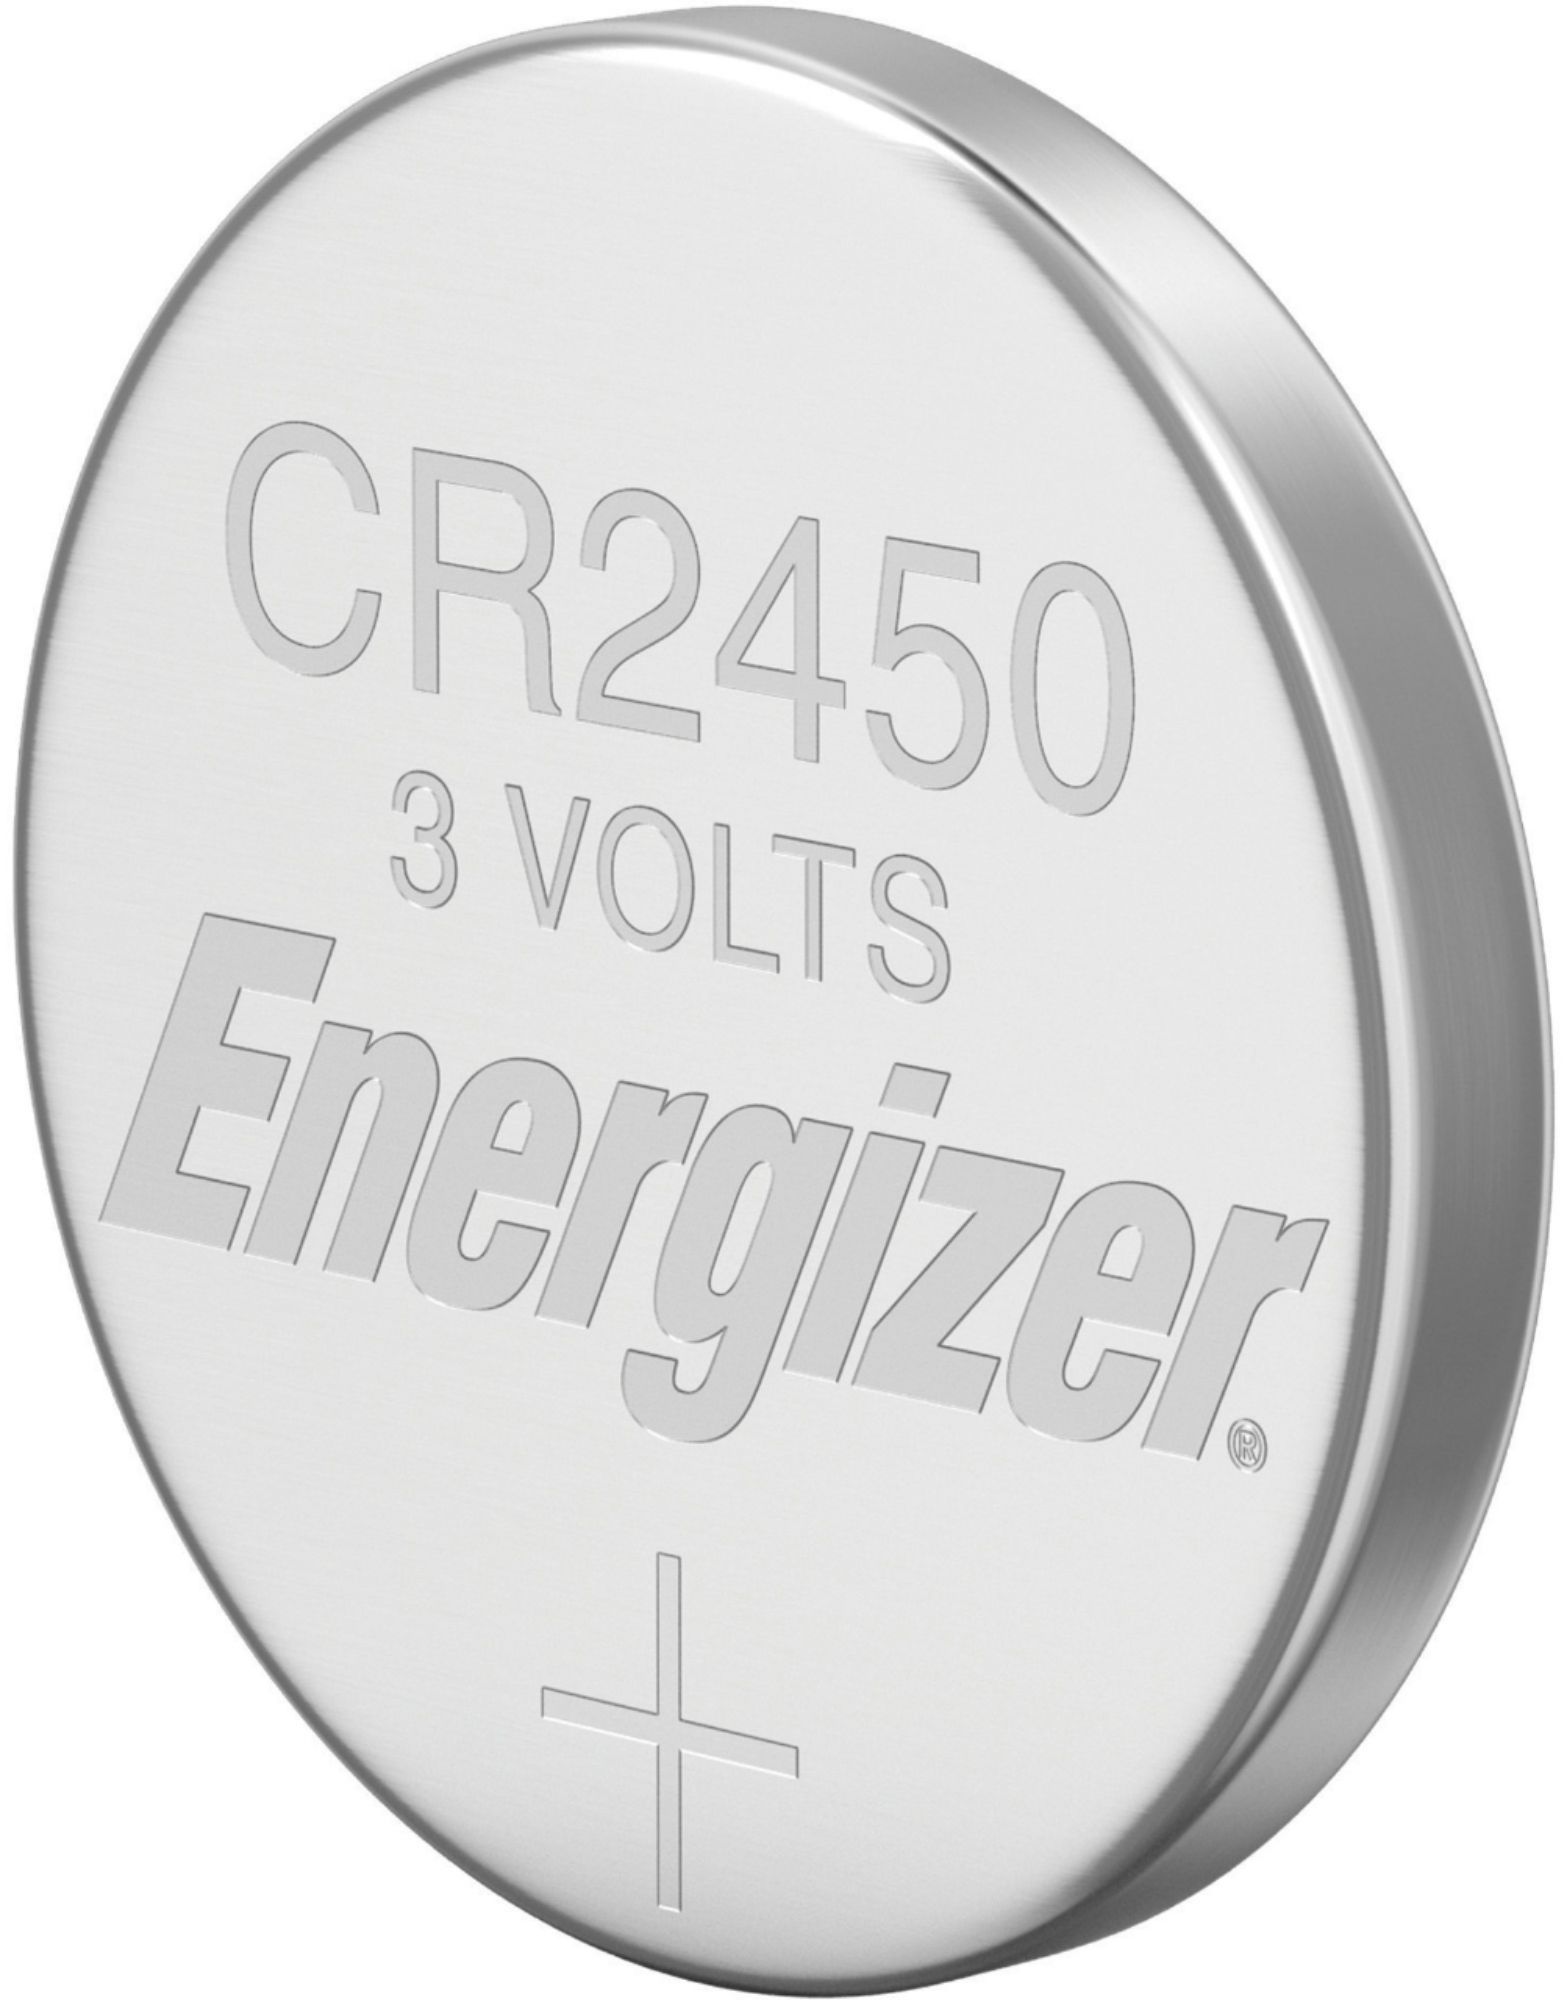 Beidongli CR2450 Battery 3V CR2450 Lithium Batteries (20 Count) - Yahoo  Shopping